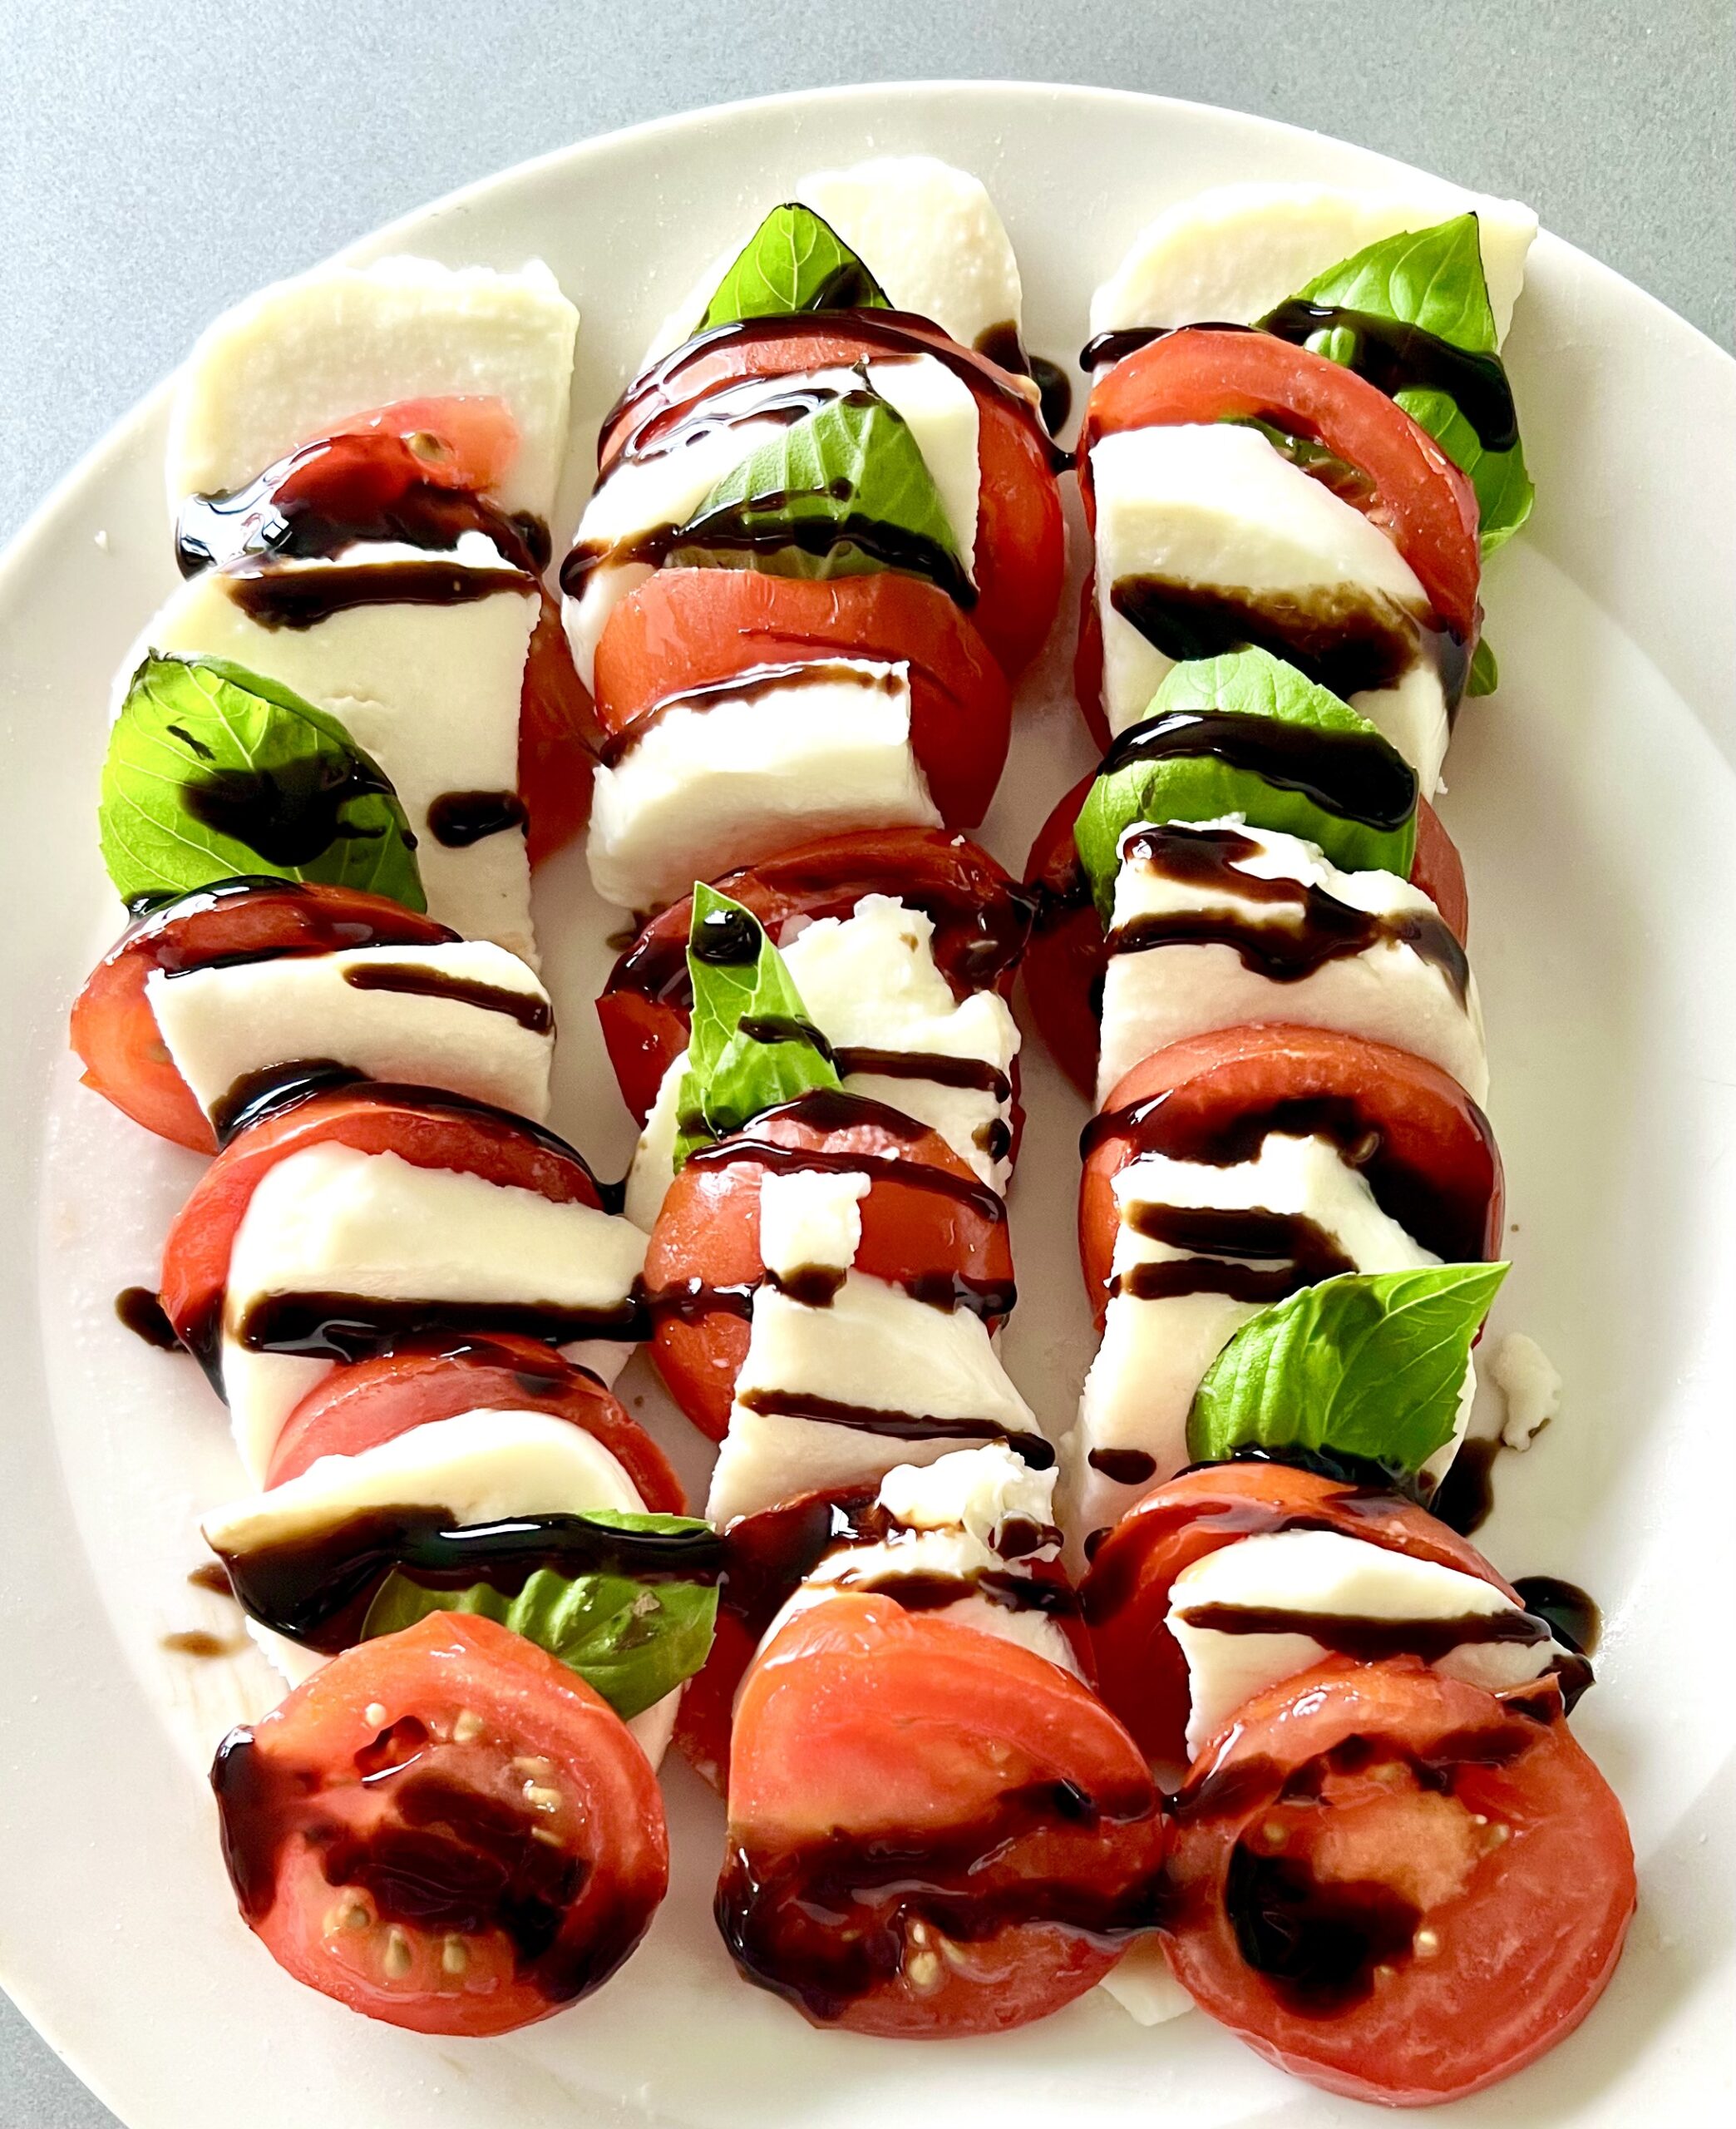 Fresh Caprese Salad - Mozzarella, Tomatoes and Basil - Part of the Mediterranean Diet